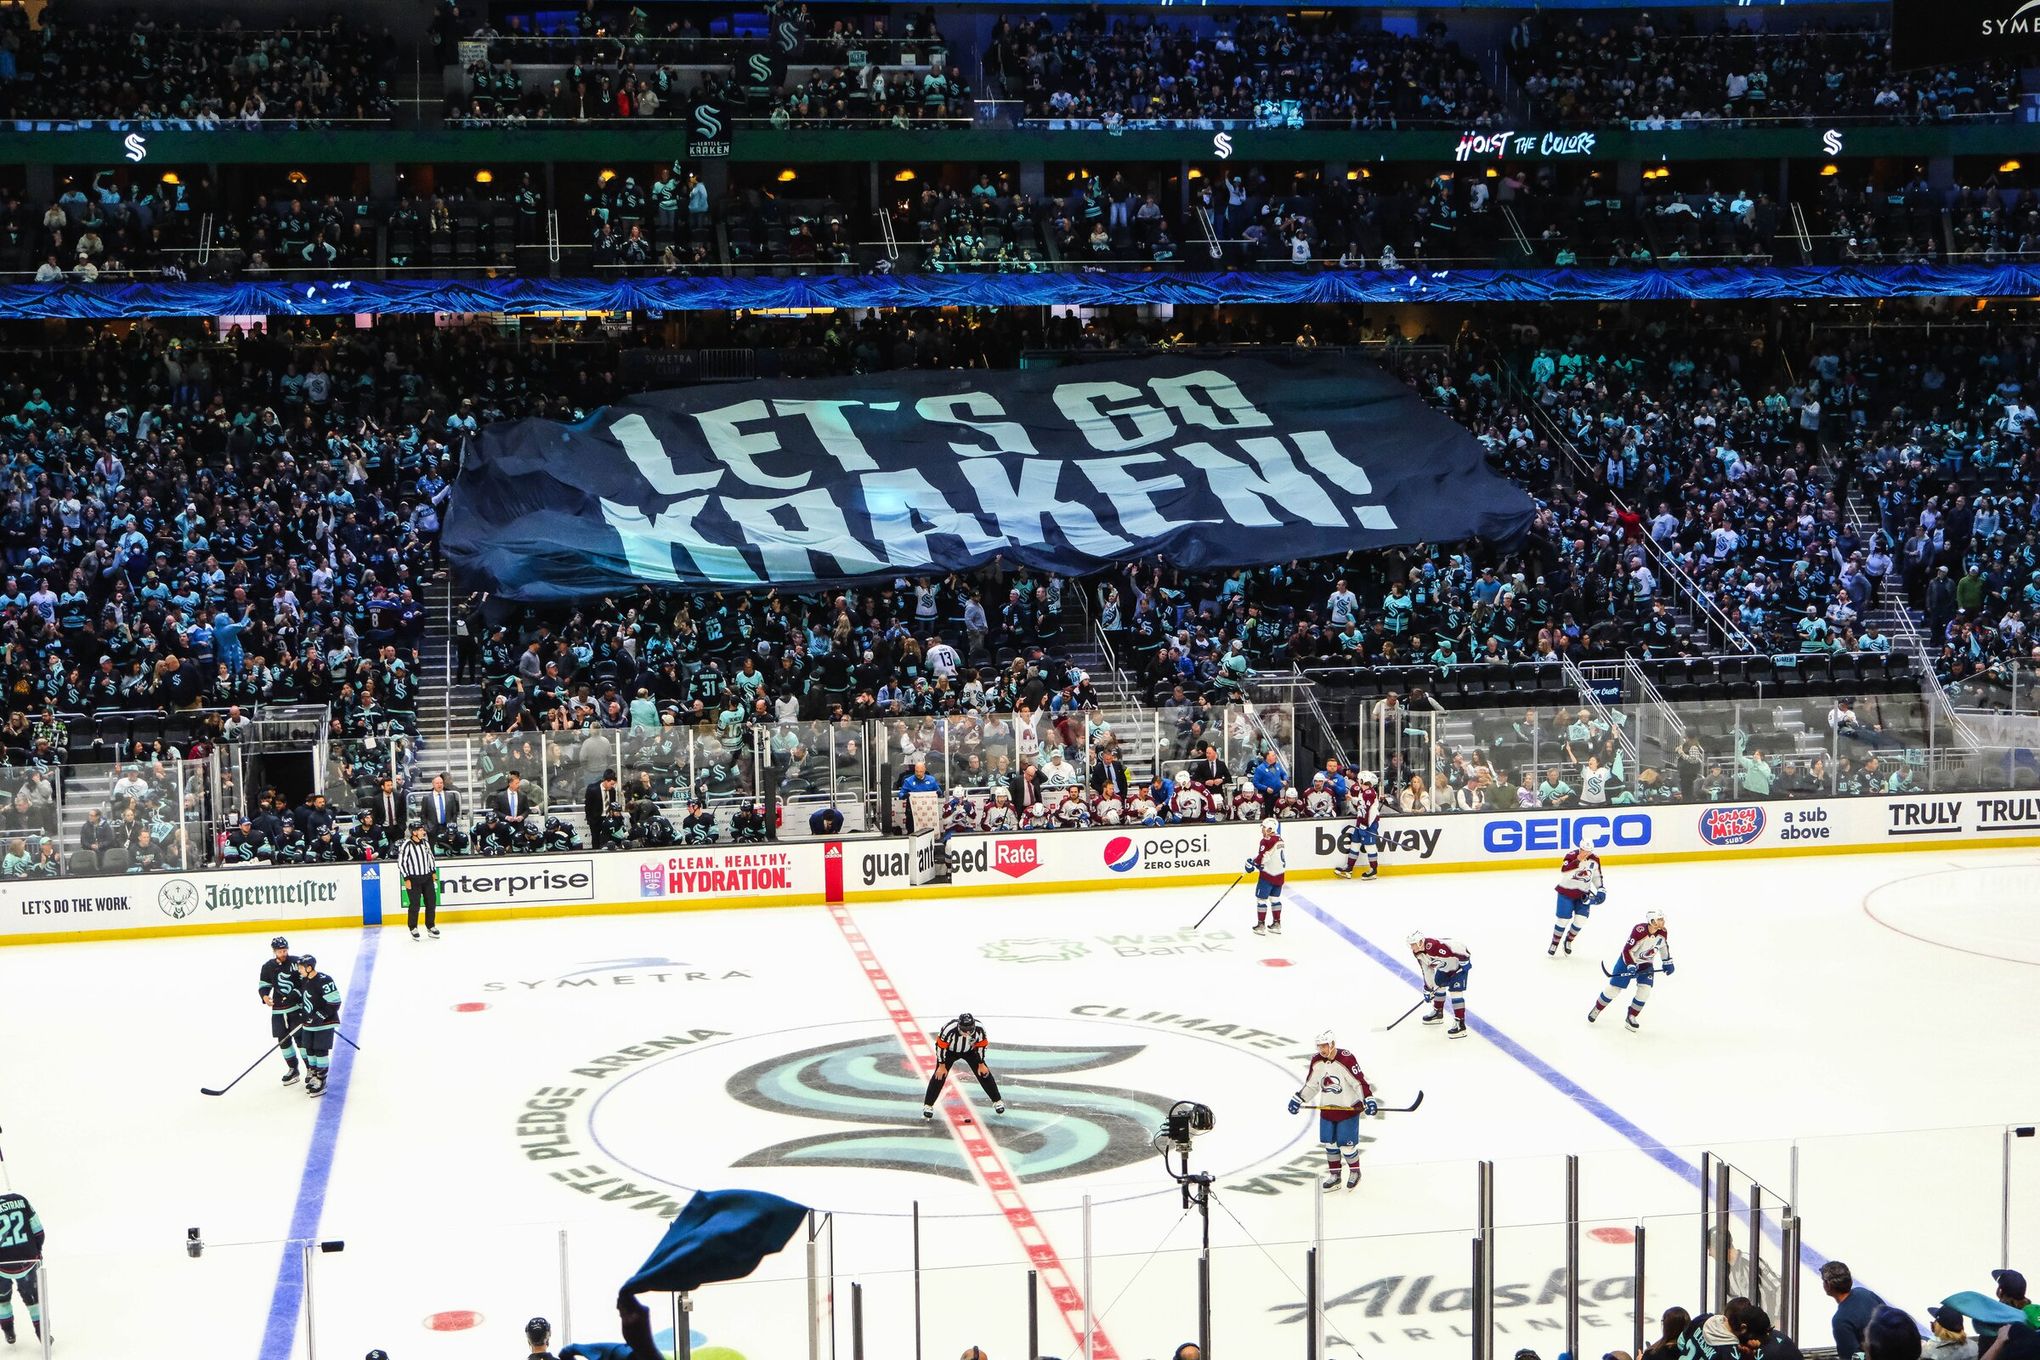 European hockey fans, how did jerseys become massive billboards? : r/hockey